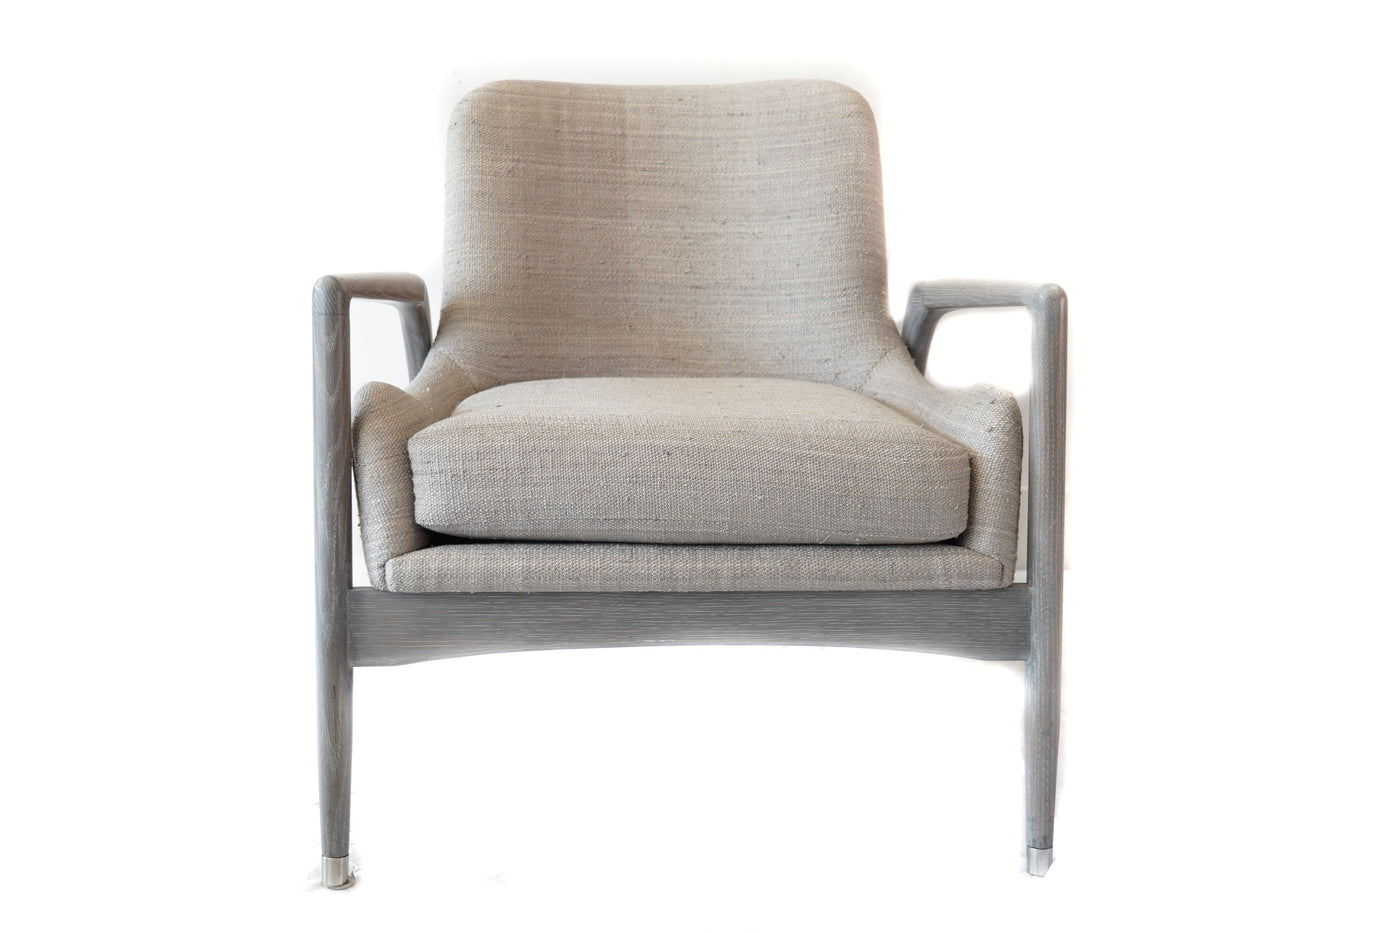 Plunk Chair Light grey Chair - Mar Silver